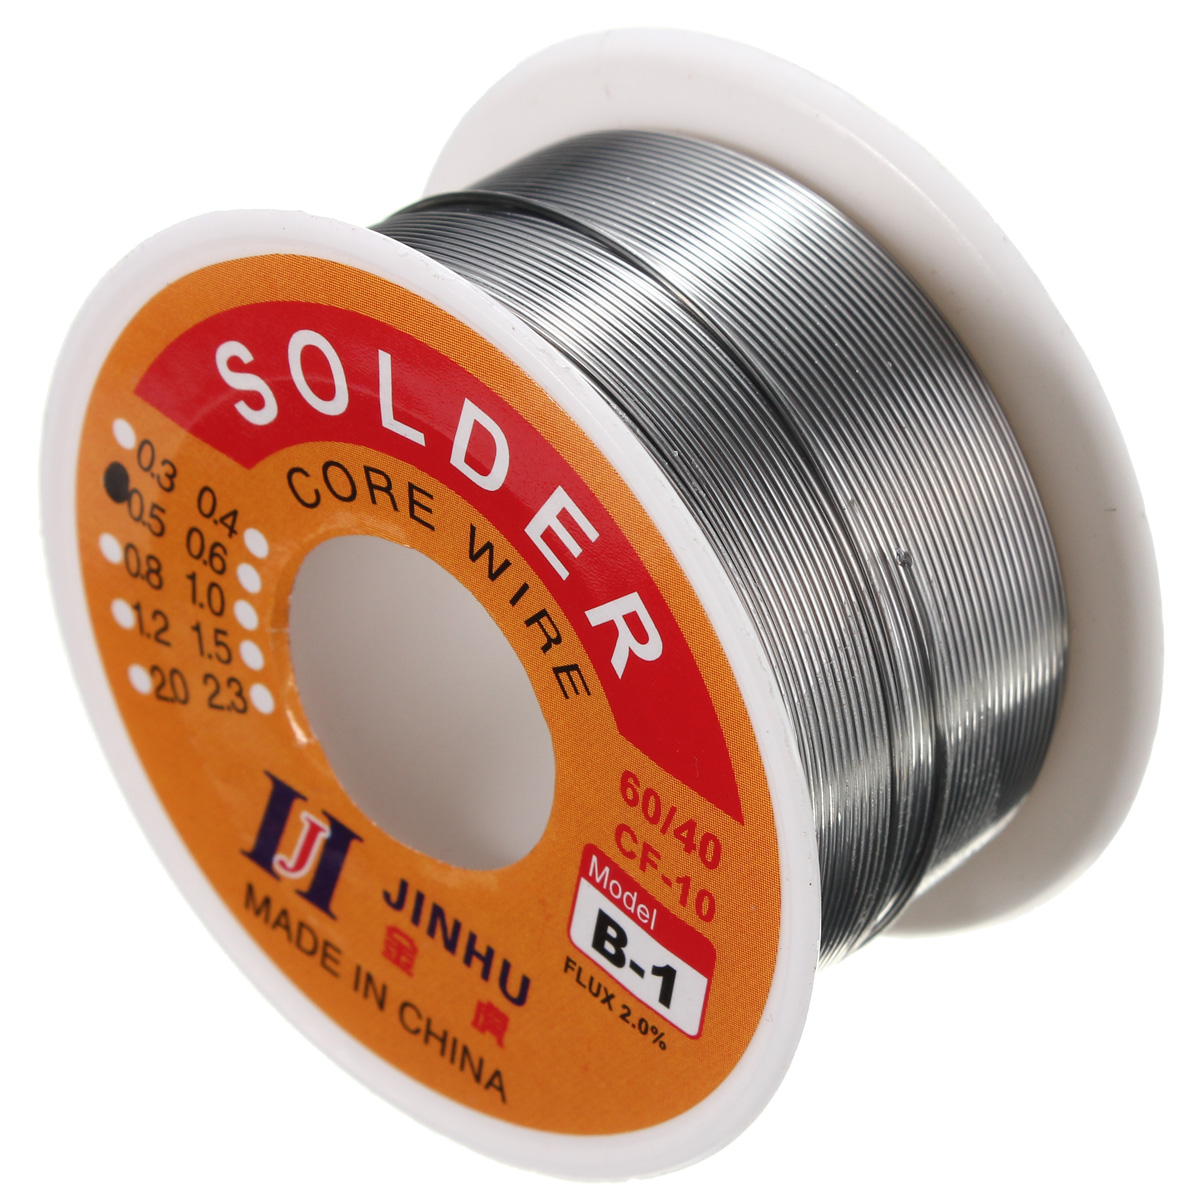 05mm-Tin-lead-Solder-Wire-Rosin-Core-Soldering-2-Flux-Reel-Tube-6040-985803